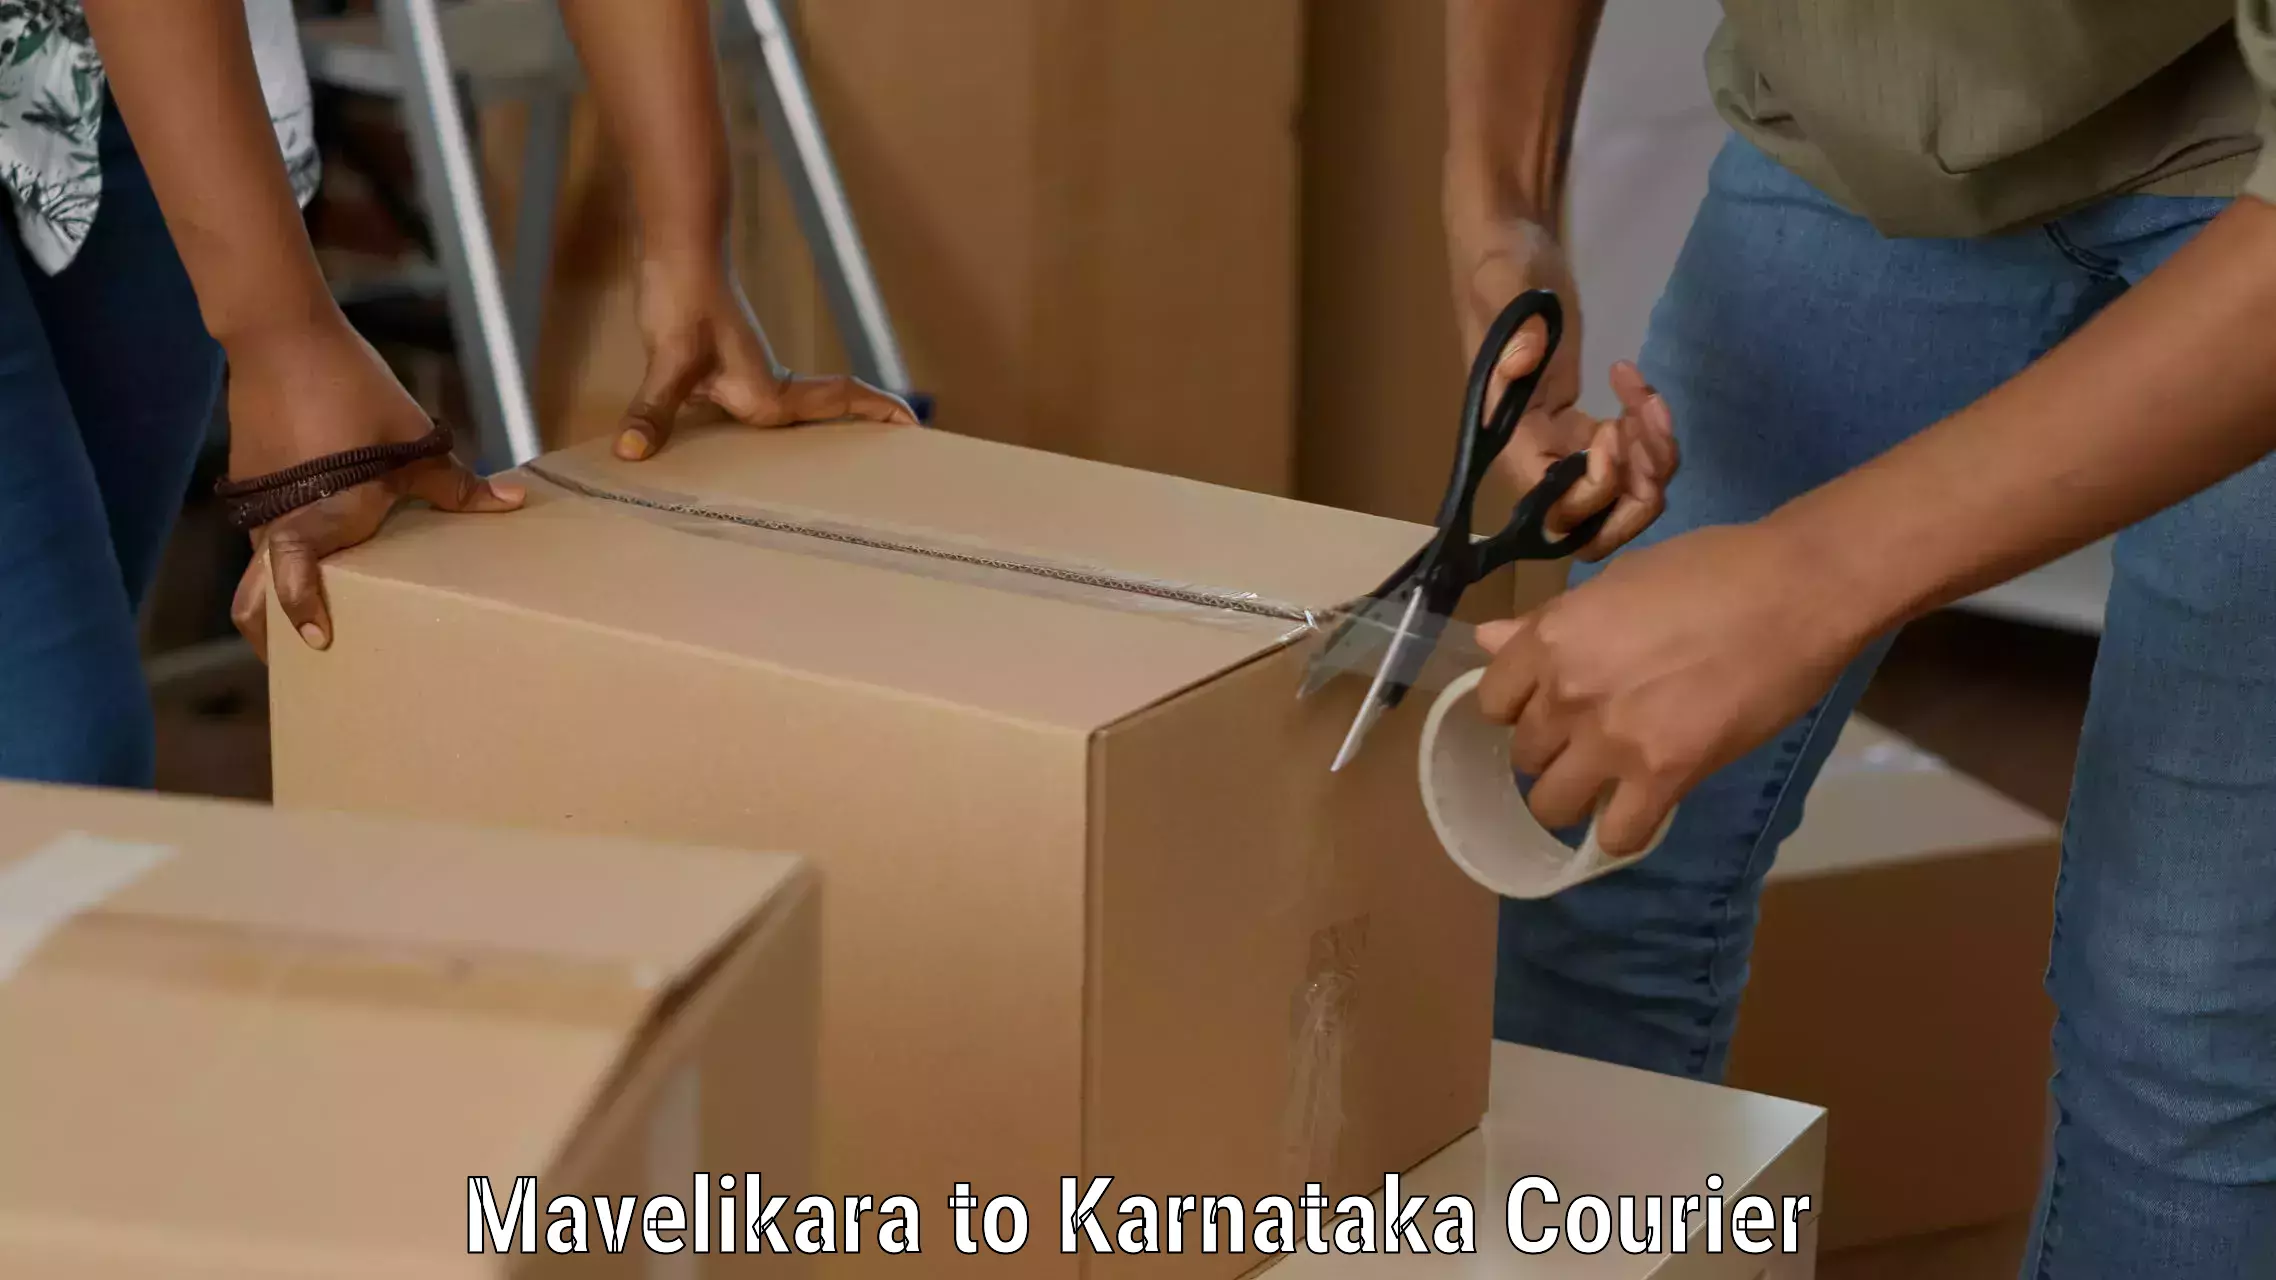 Efficient package consolidation Mavelikara to Karnataka